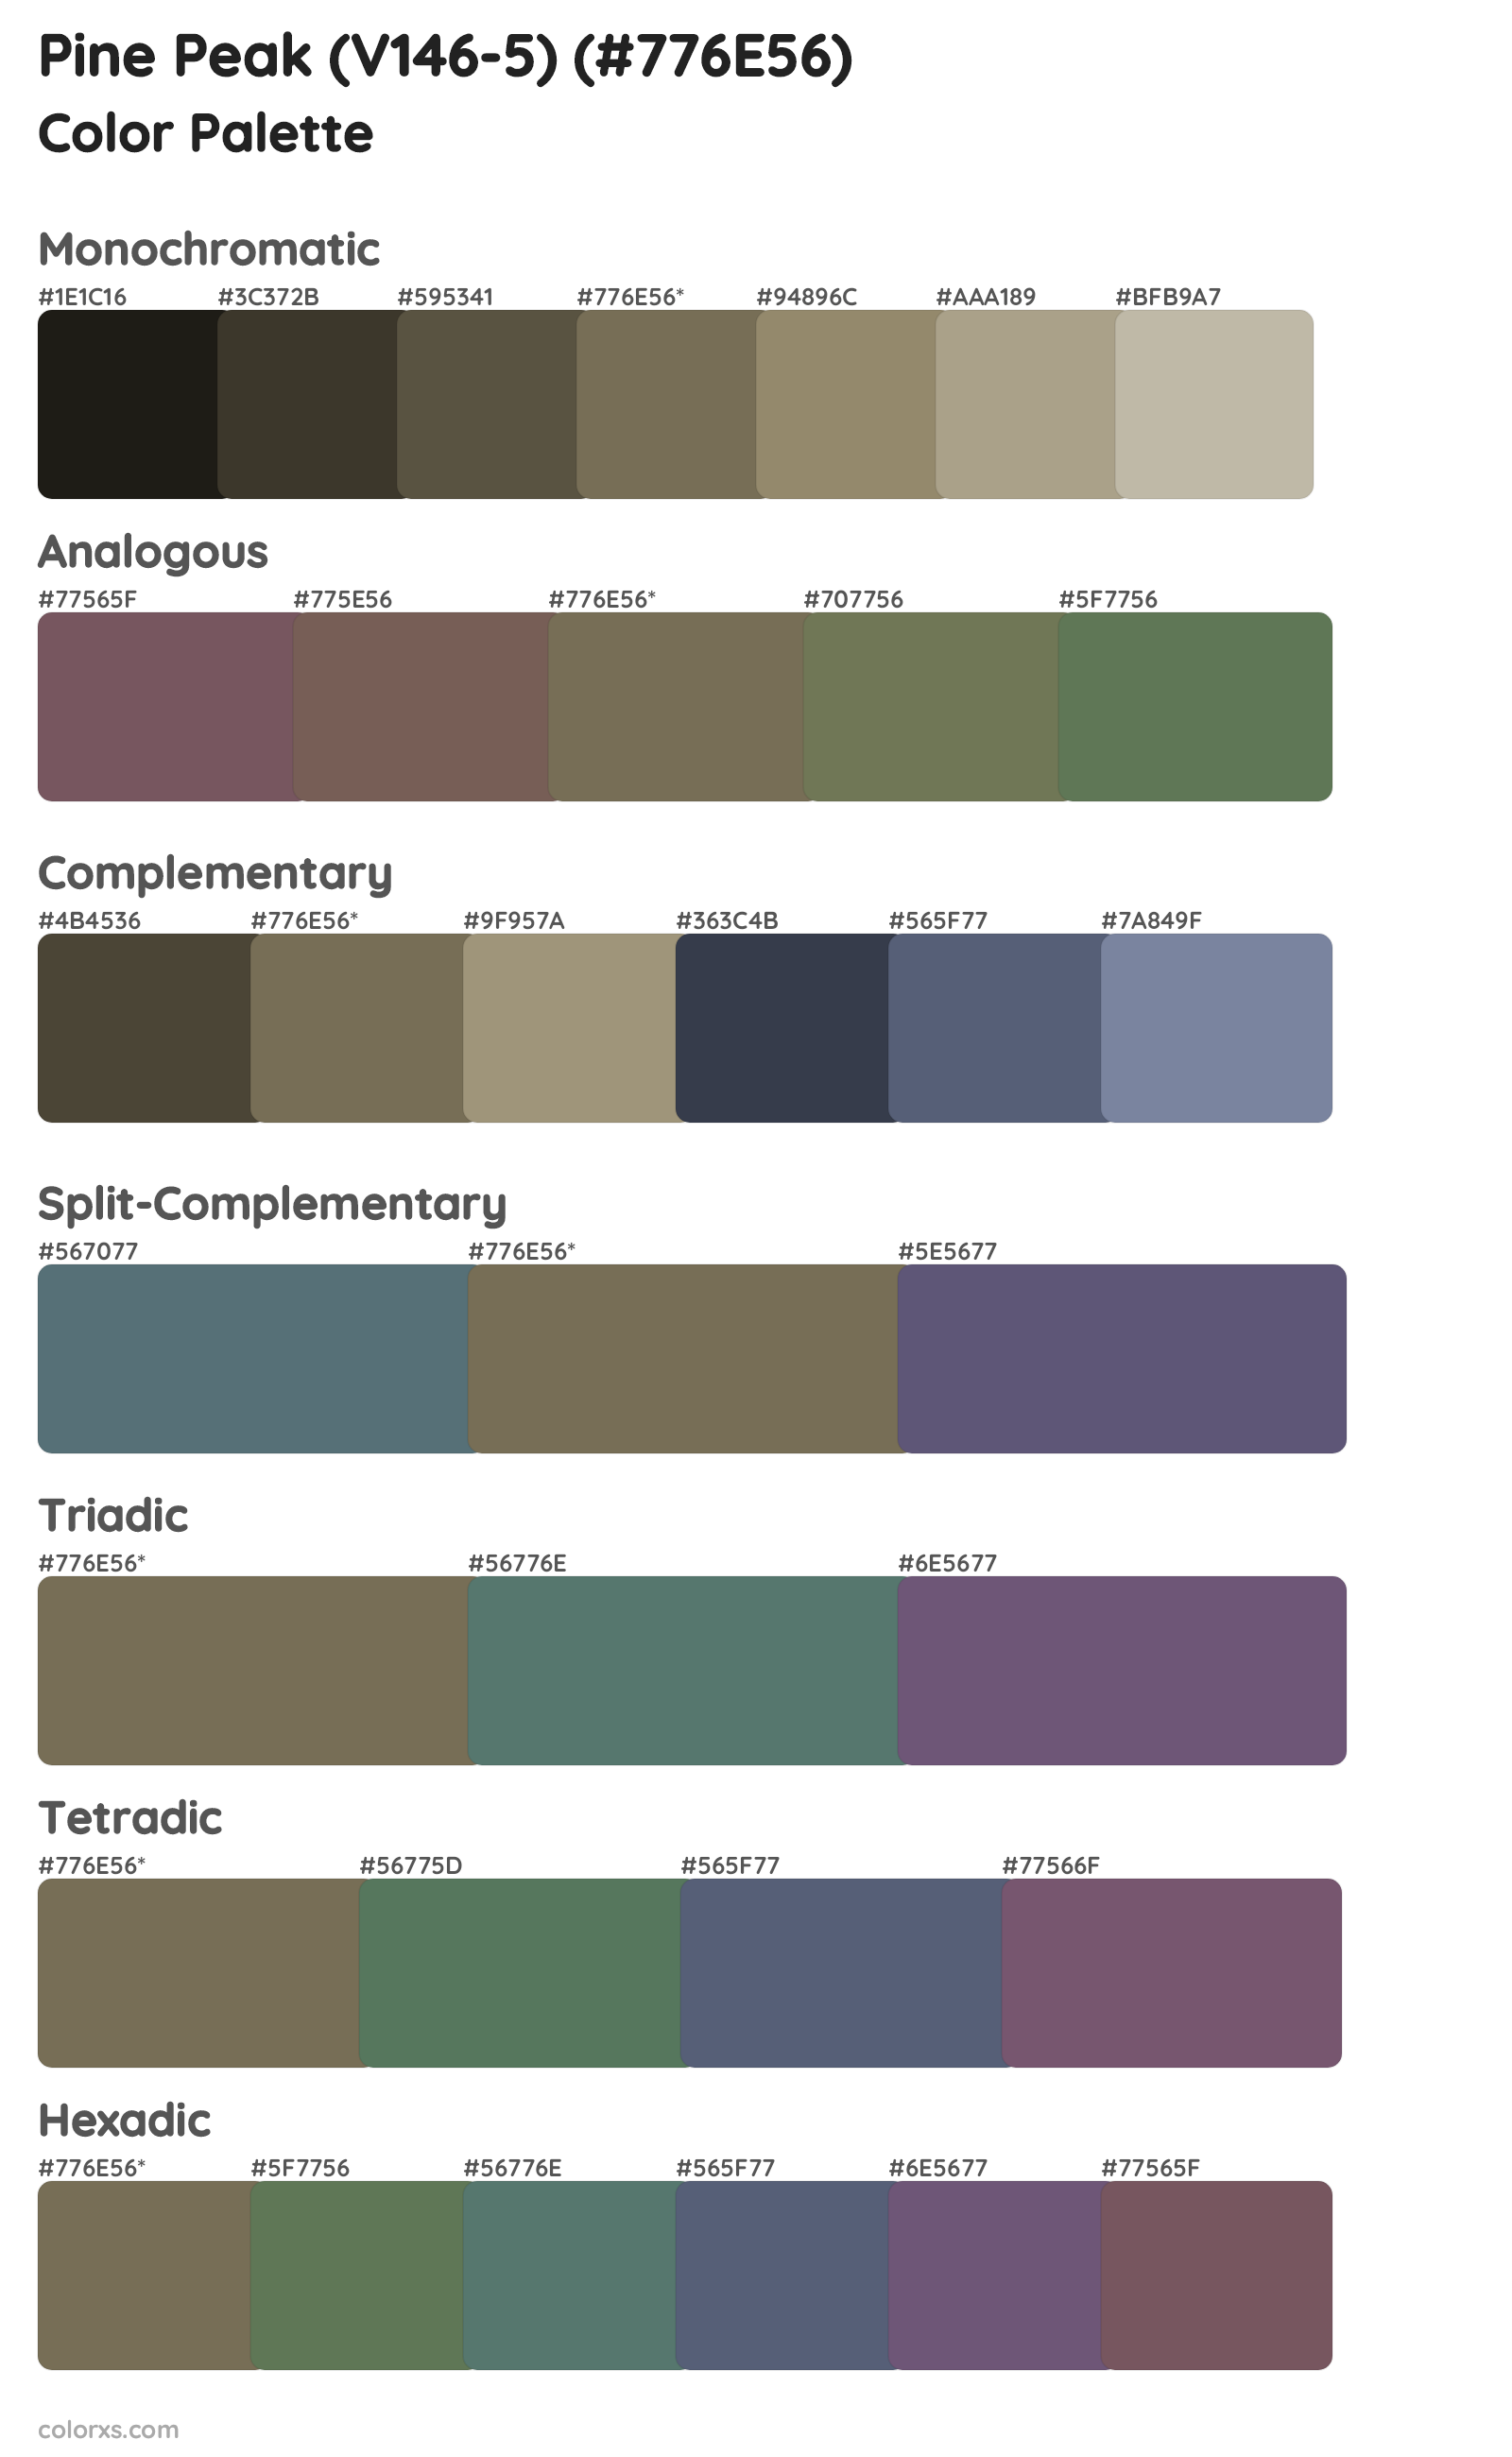 Pine Peak (V146-5) Color Scheme Palettes